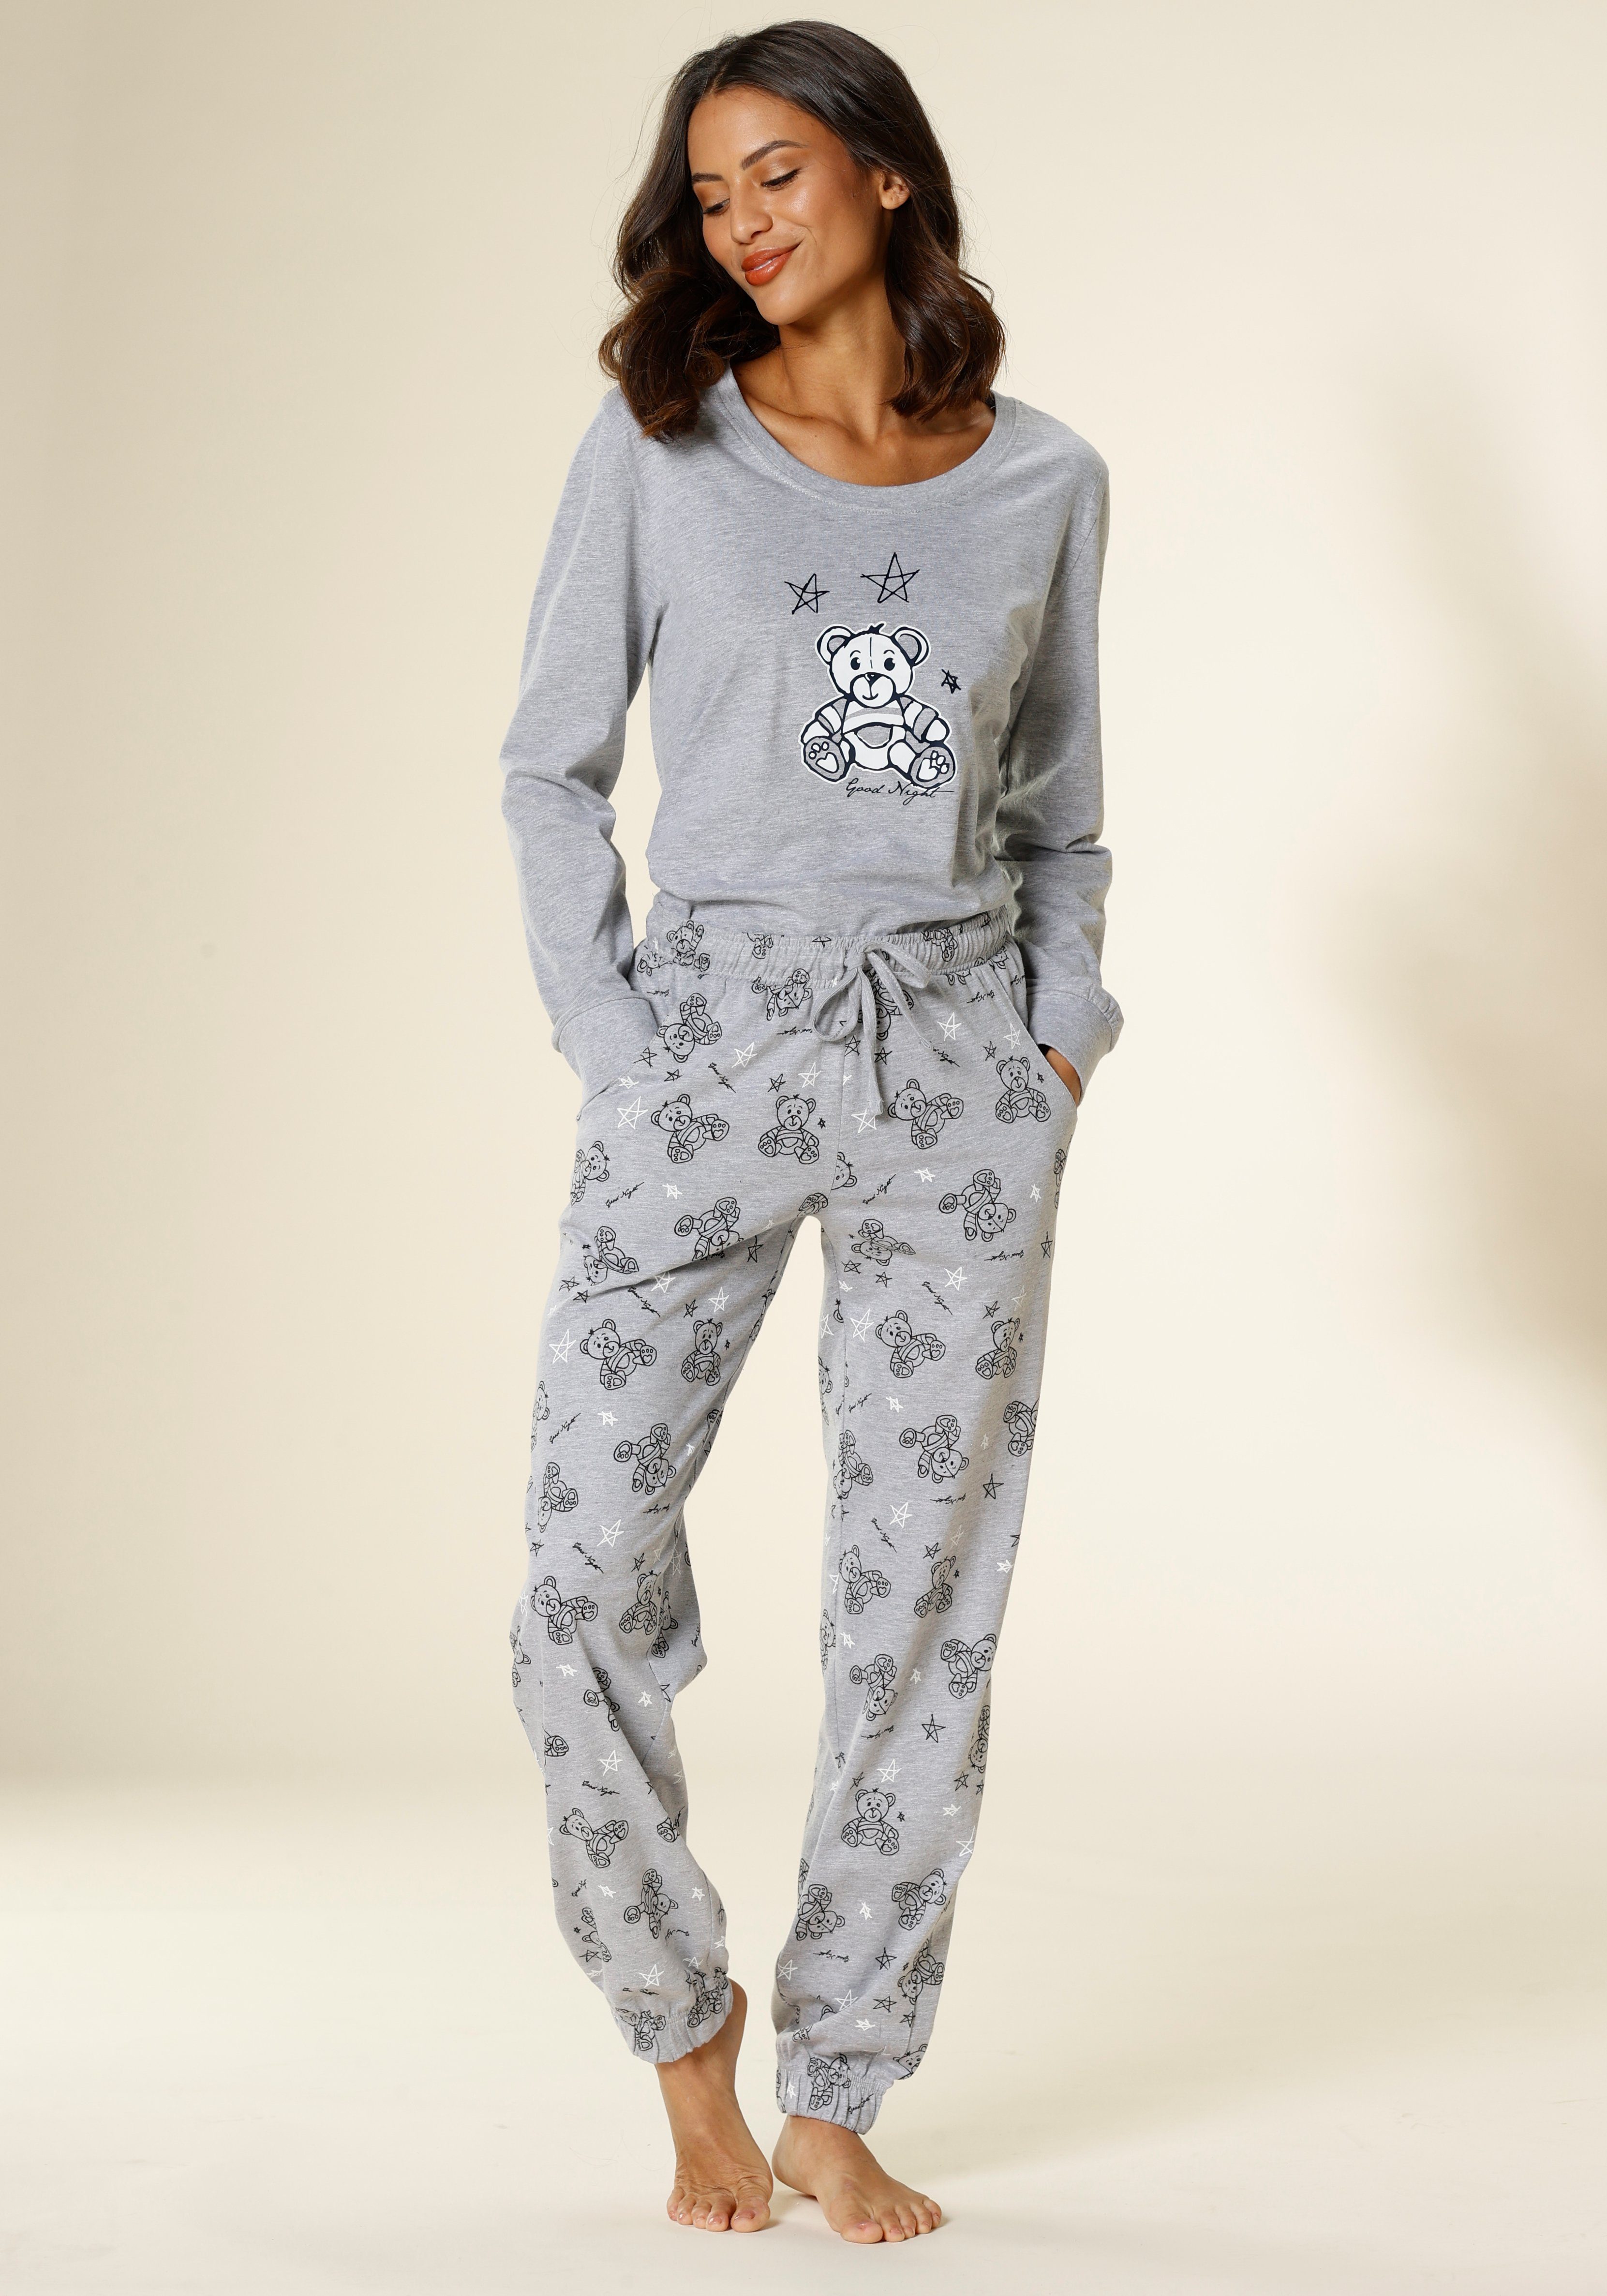 Vivance Dreams Pyjama online kaufen | OTTO